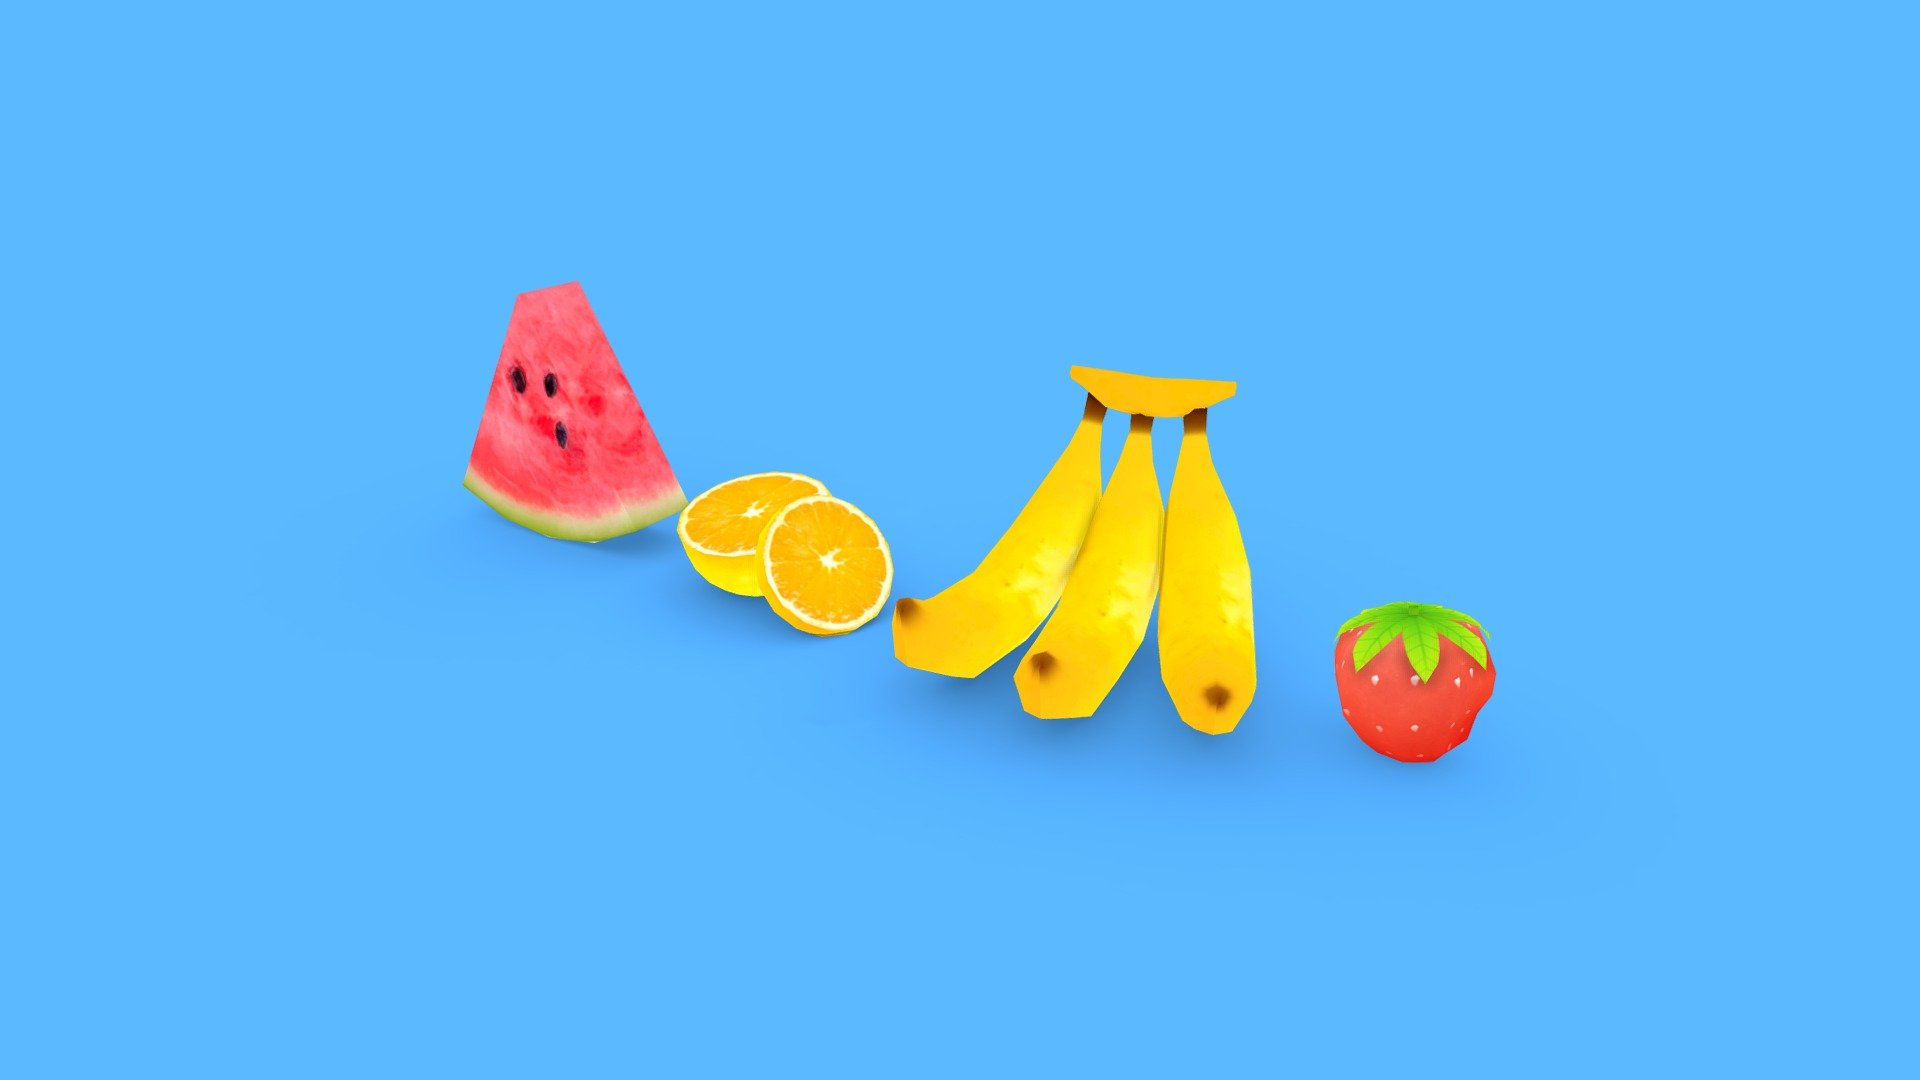 You can follow me https://www.behance.net/adasils
Thank you! - Stylized Fruits - Download Free 3D model by adamaysils 3d model